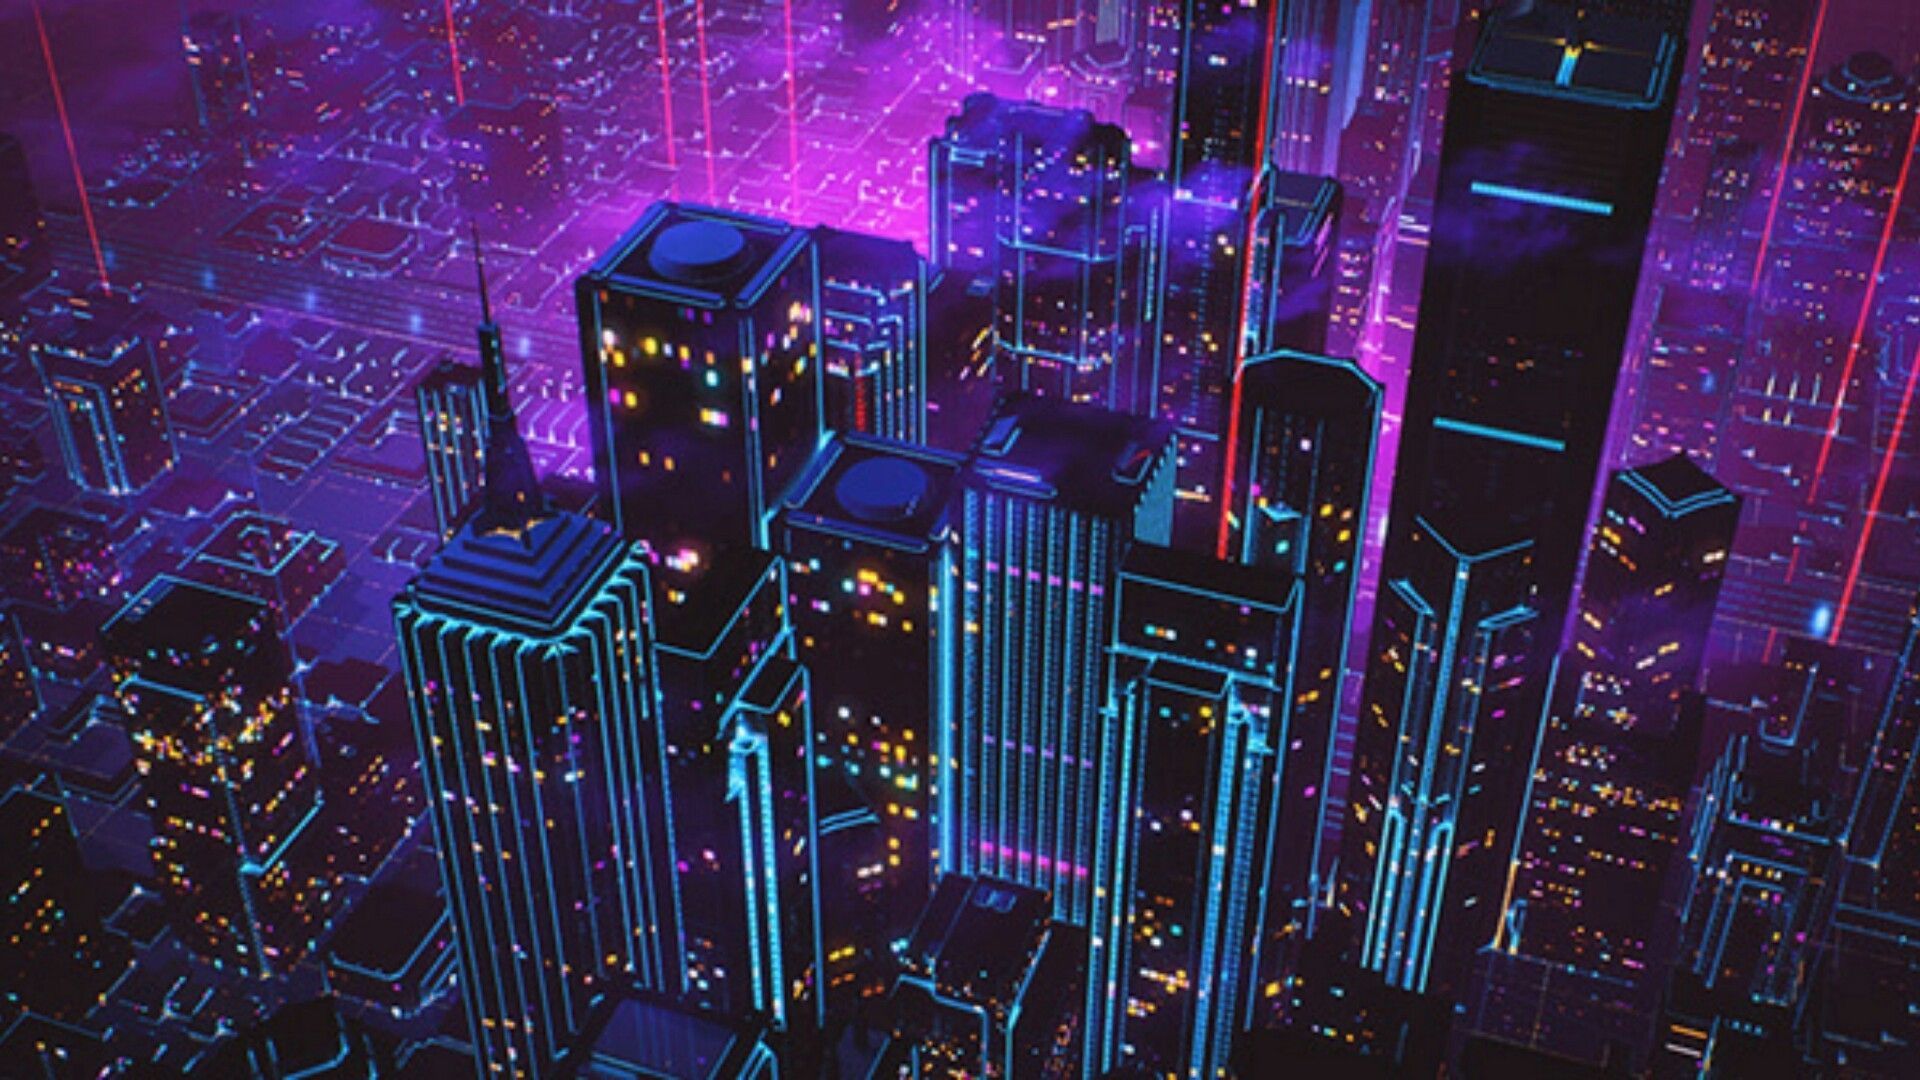 Neon Future Cyberpunk Male Wallpapers